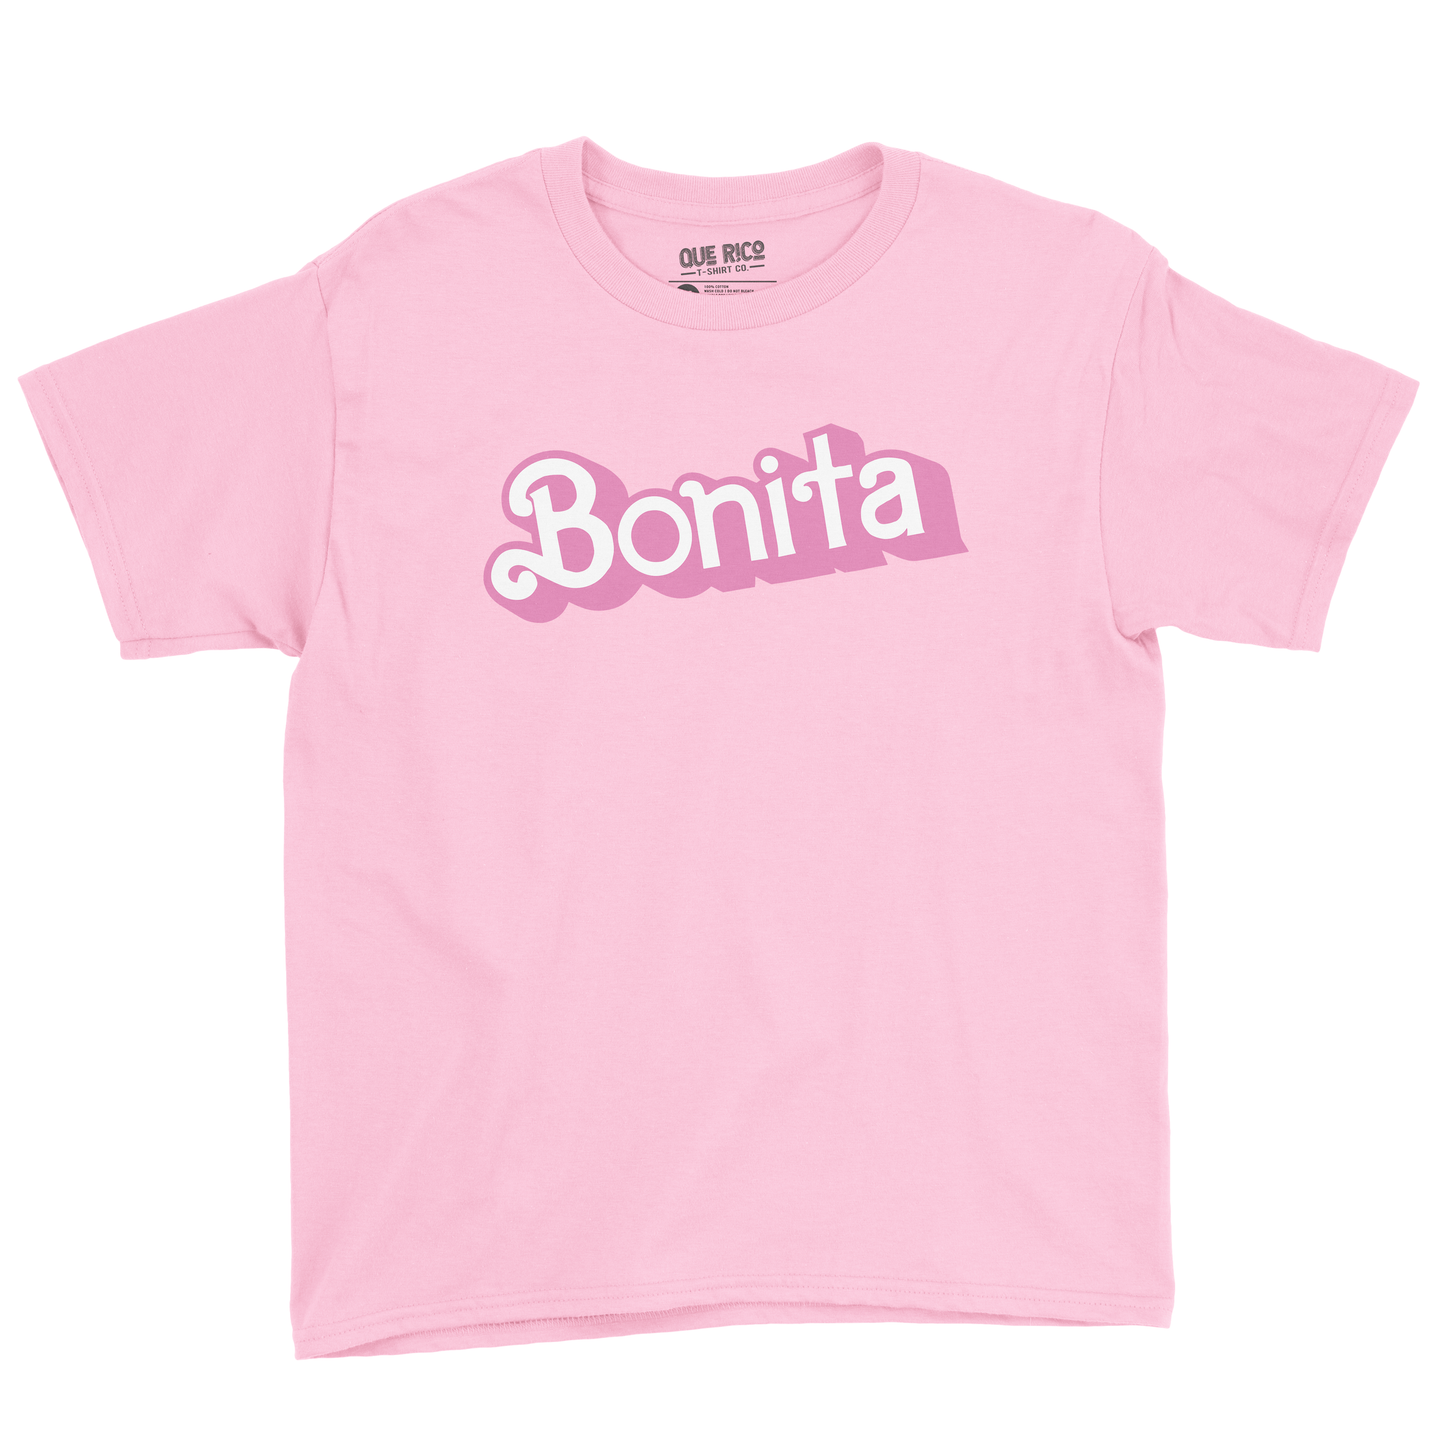 Bonita Kid's T-Shirt